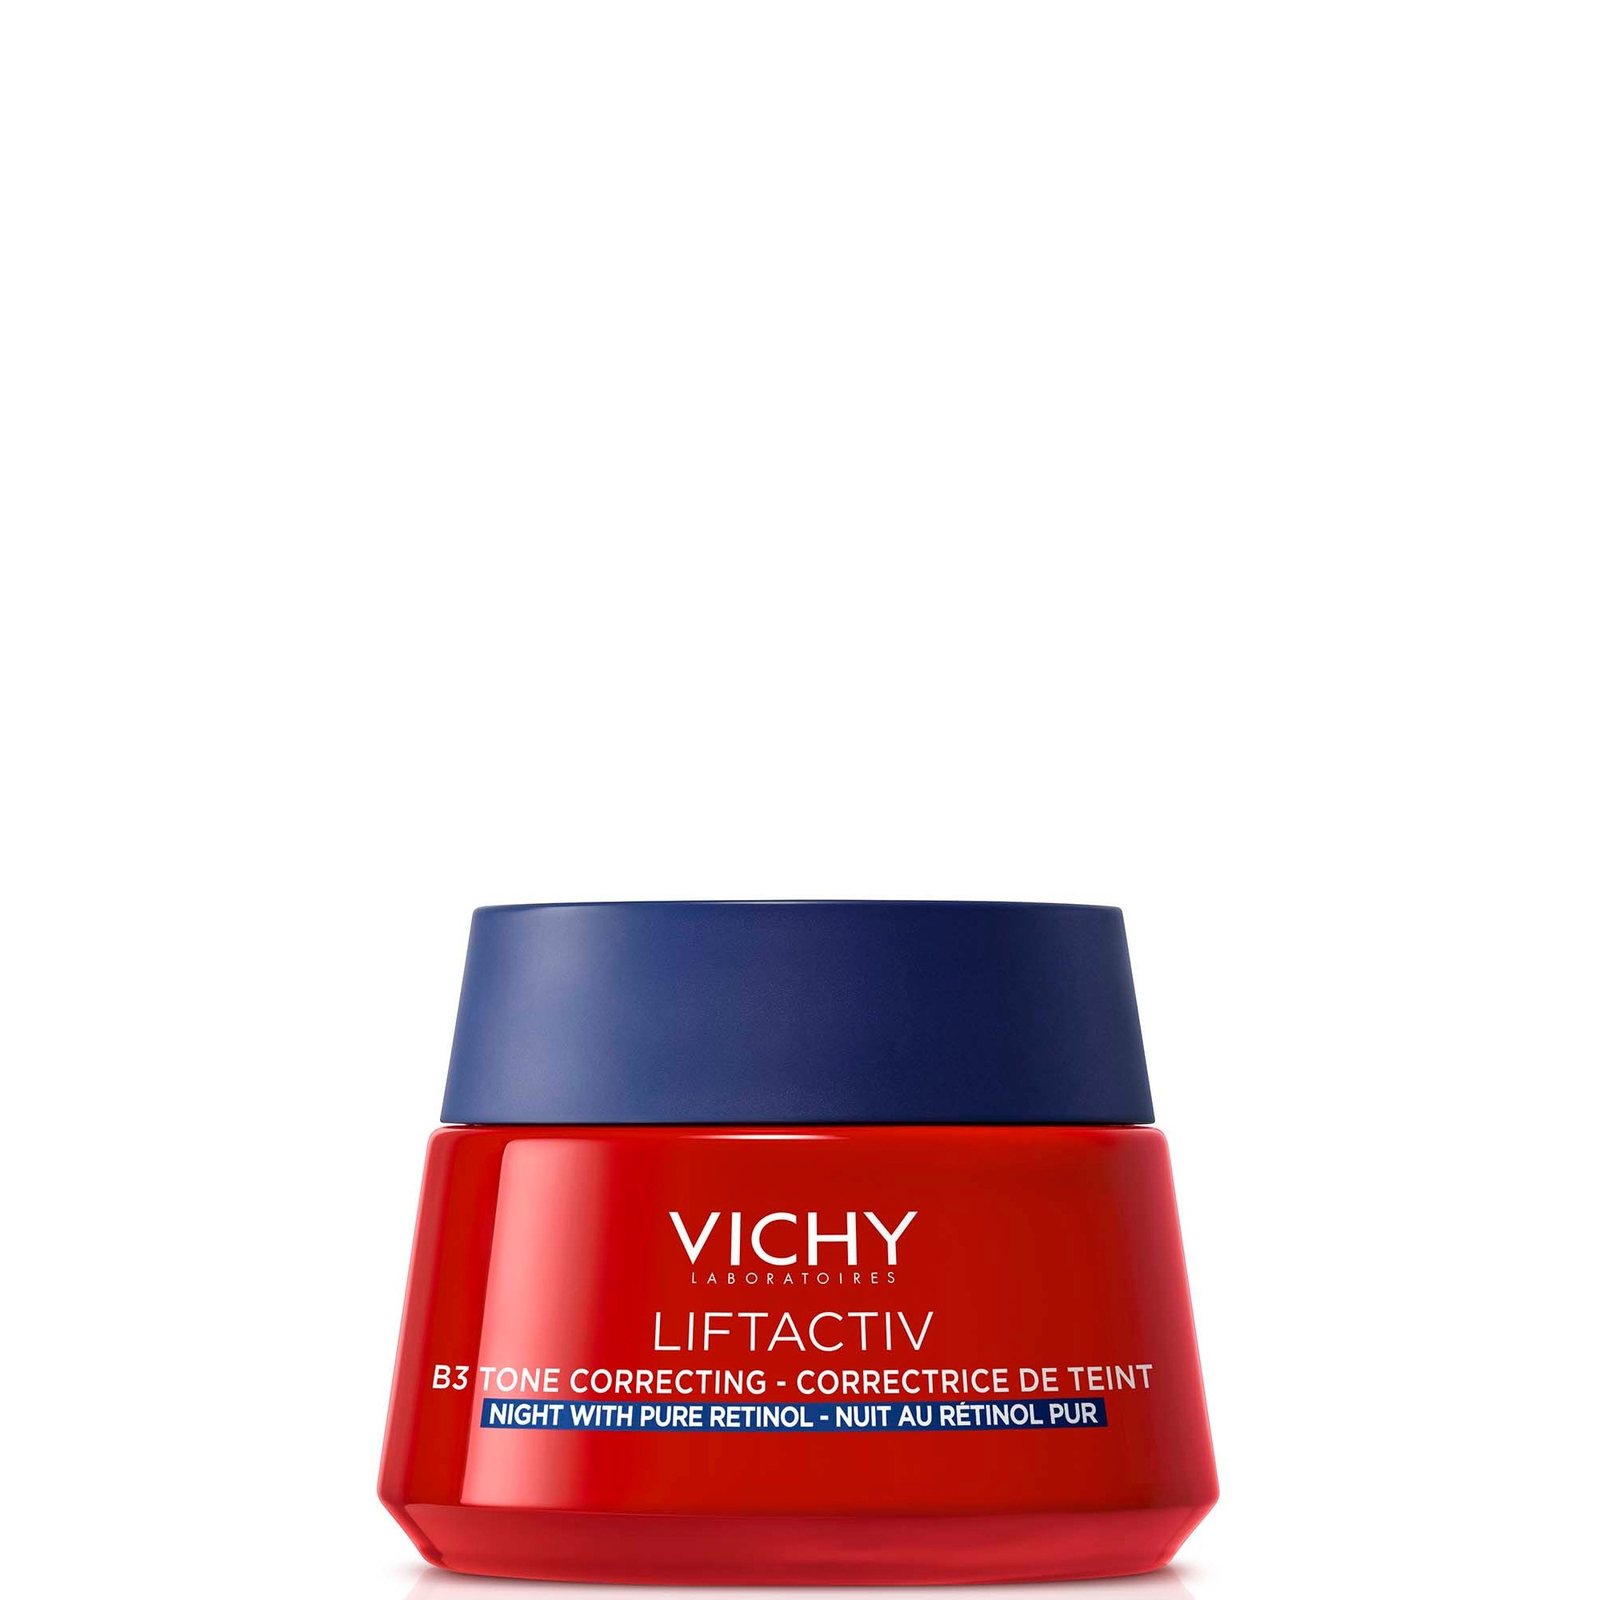 Zdjęcia - Kremy i toniki Vichy Liftactiv B3 Tone Correcting Night Cream with Pure Retinol 50ml MB58 